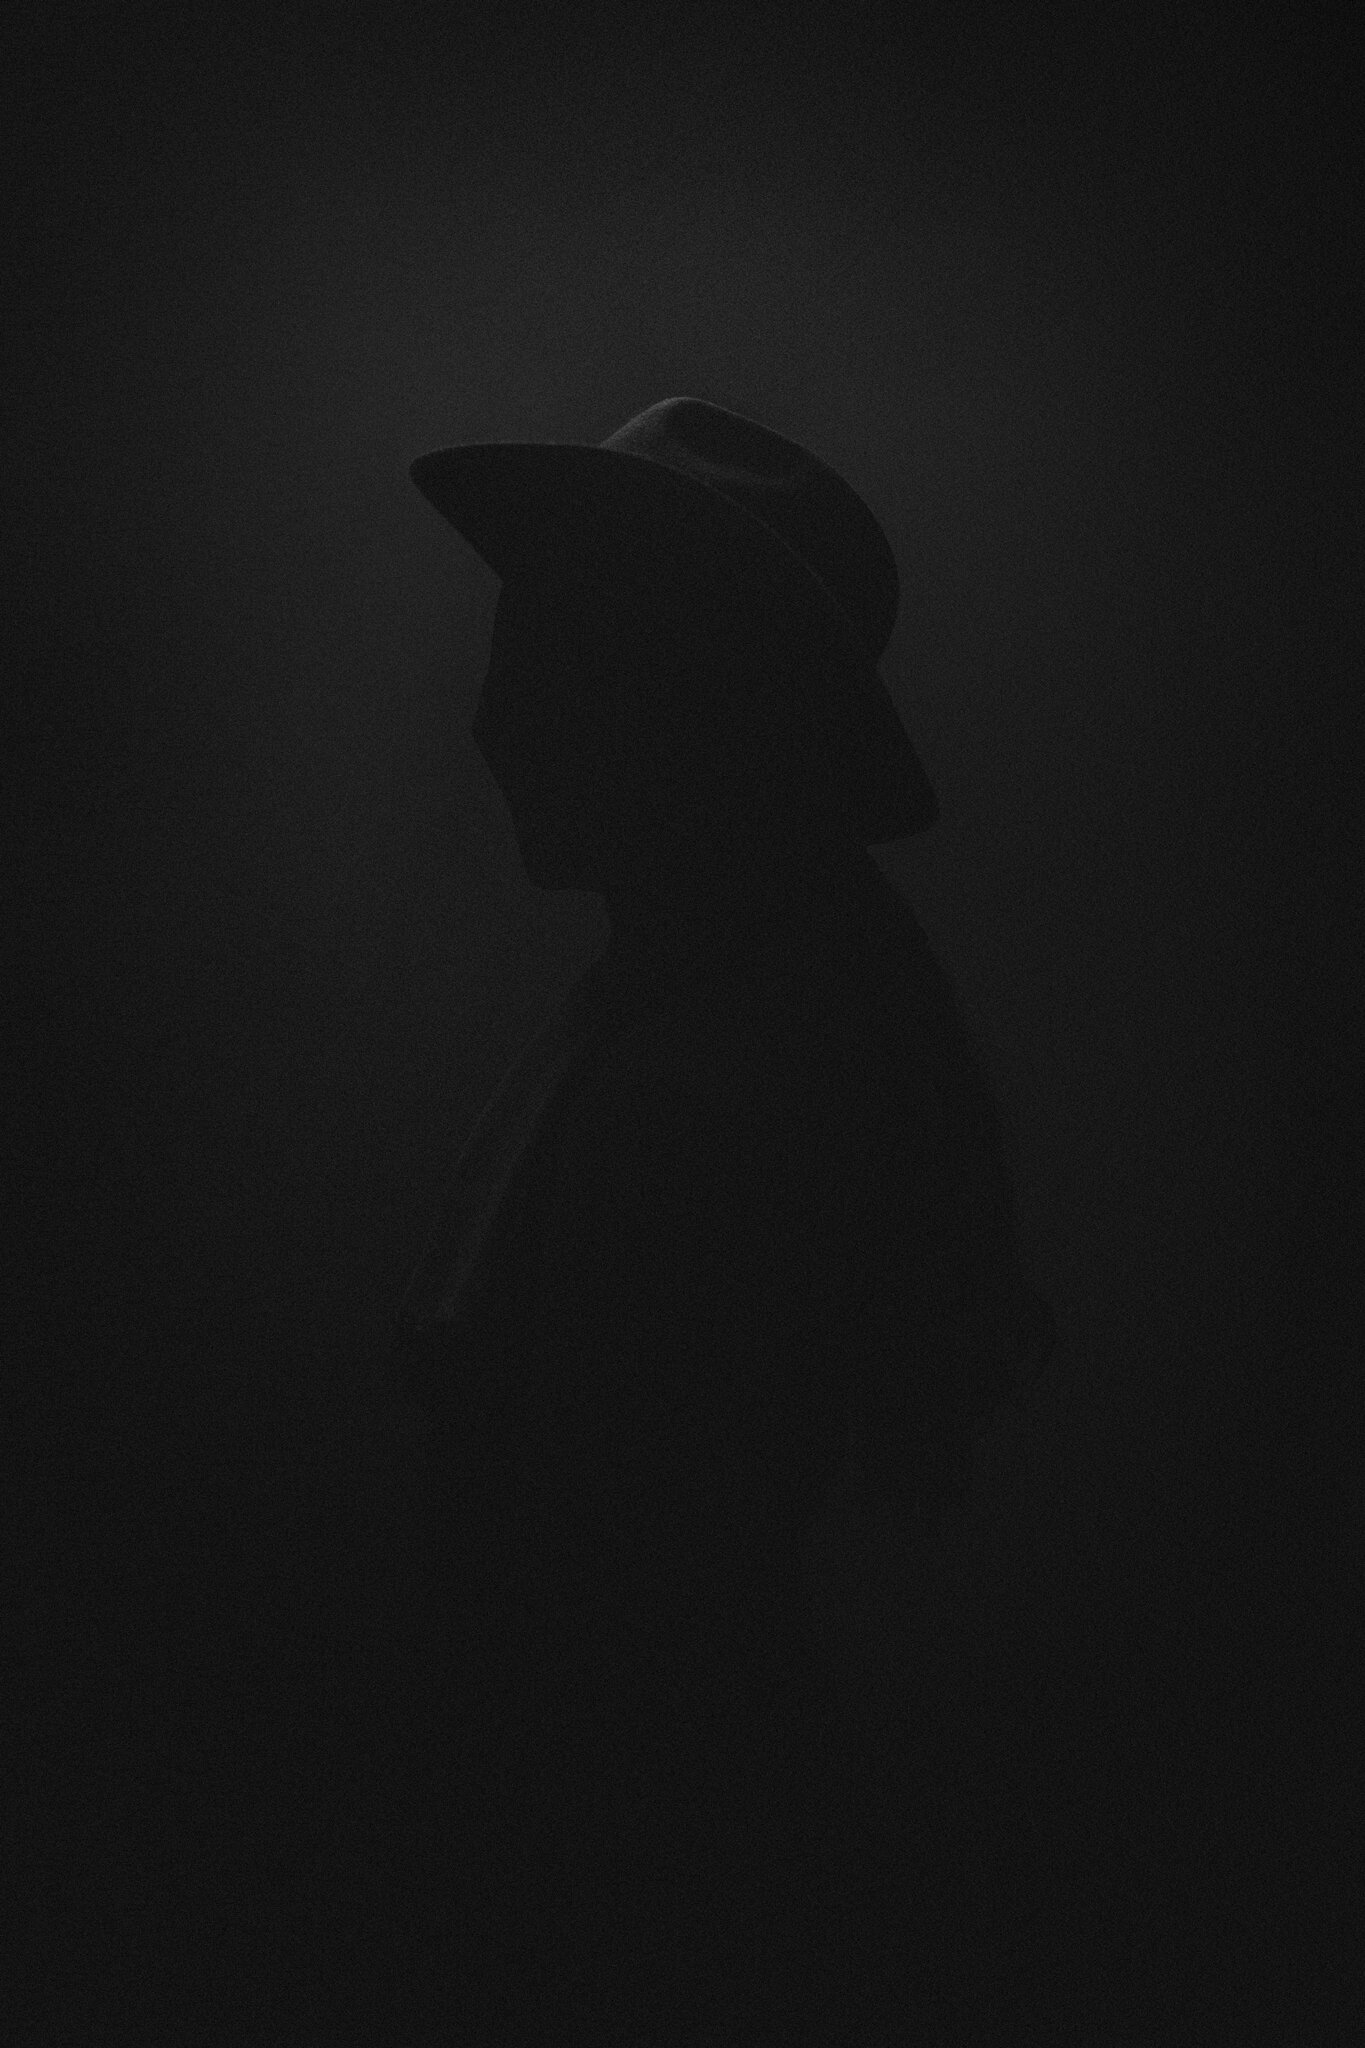 Olga-Tenyanin-Portrait-Photographer-Portland-Oregon-Vancouver-Washington-Spooky-shroud-hat-fire-reaper-death-eerie-11.jpg